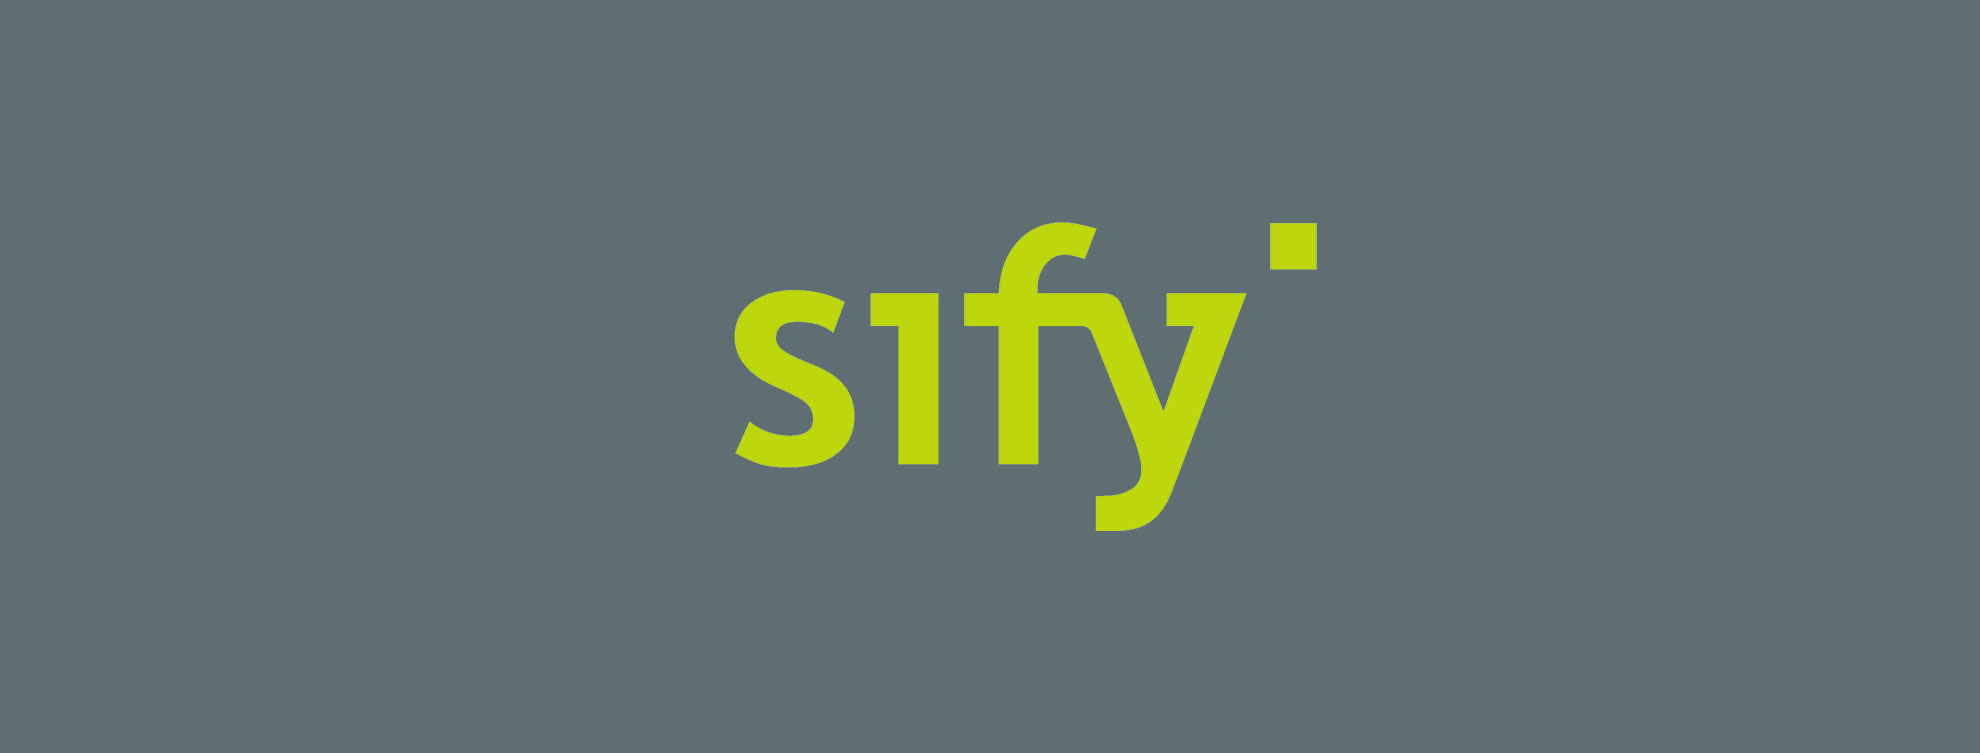 Sify-logo-new